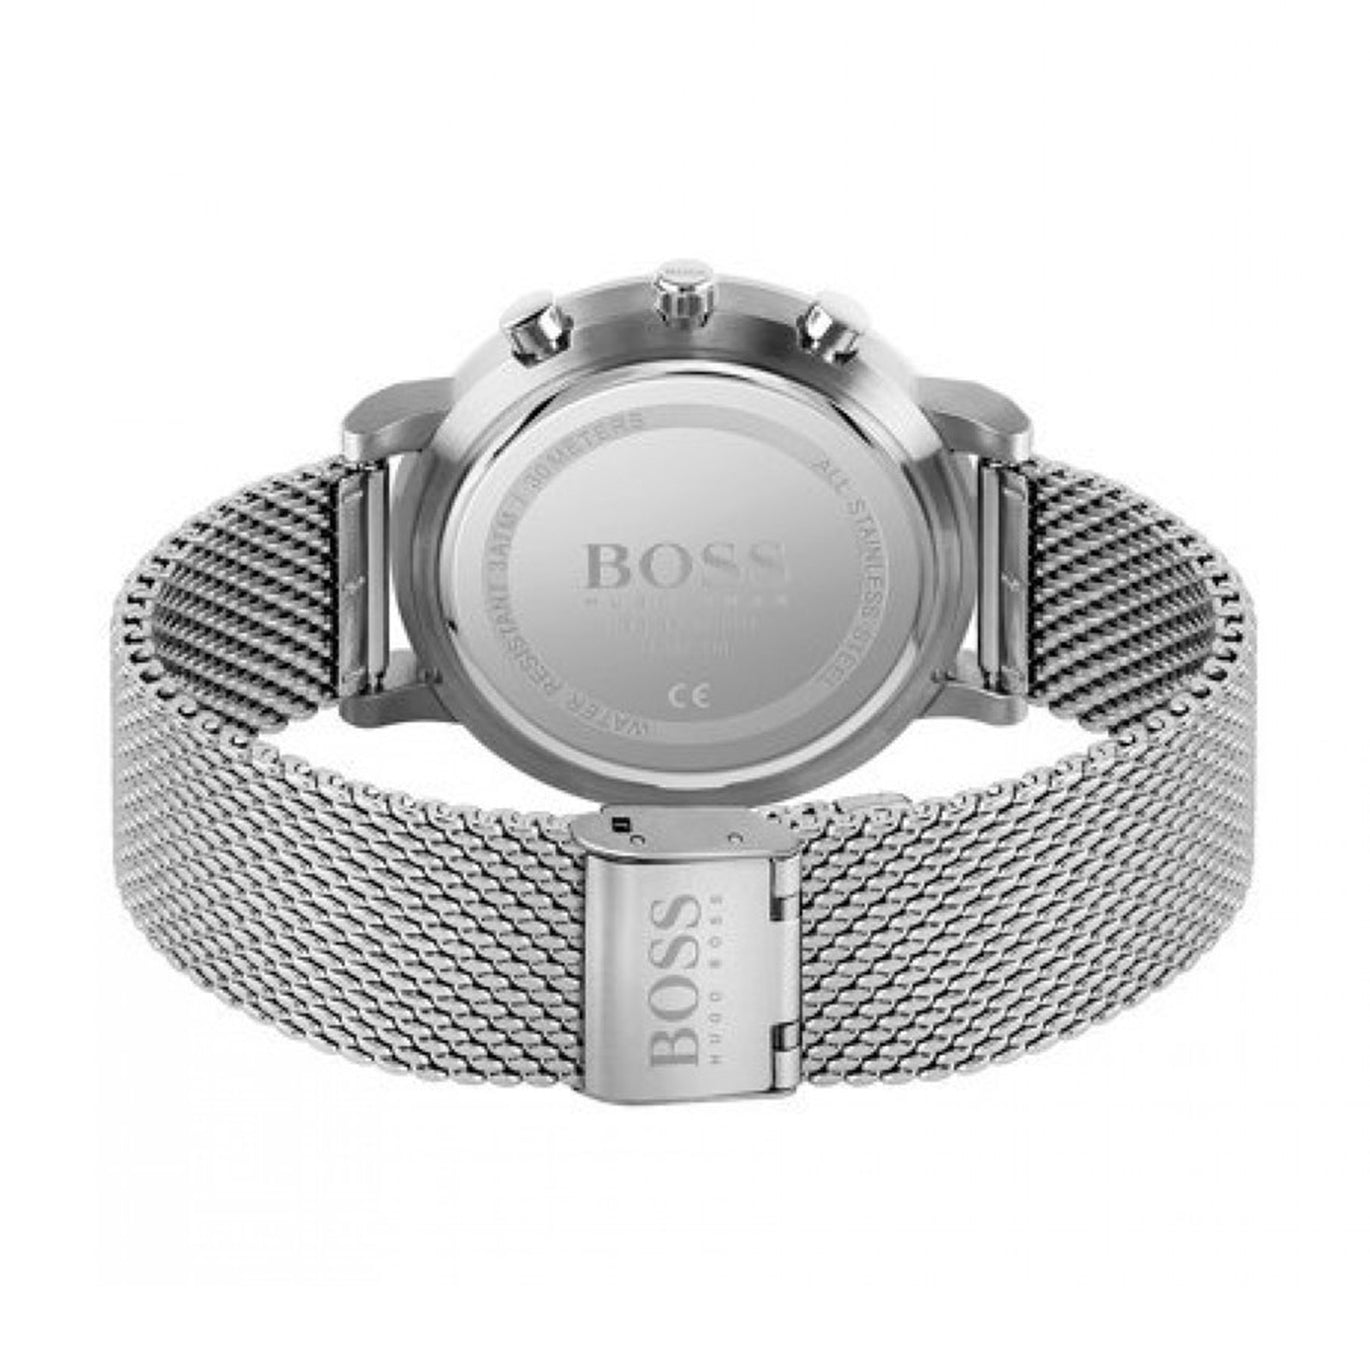 Boss Men's Integrity Grey-dial chronograph watch